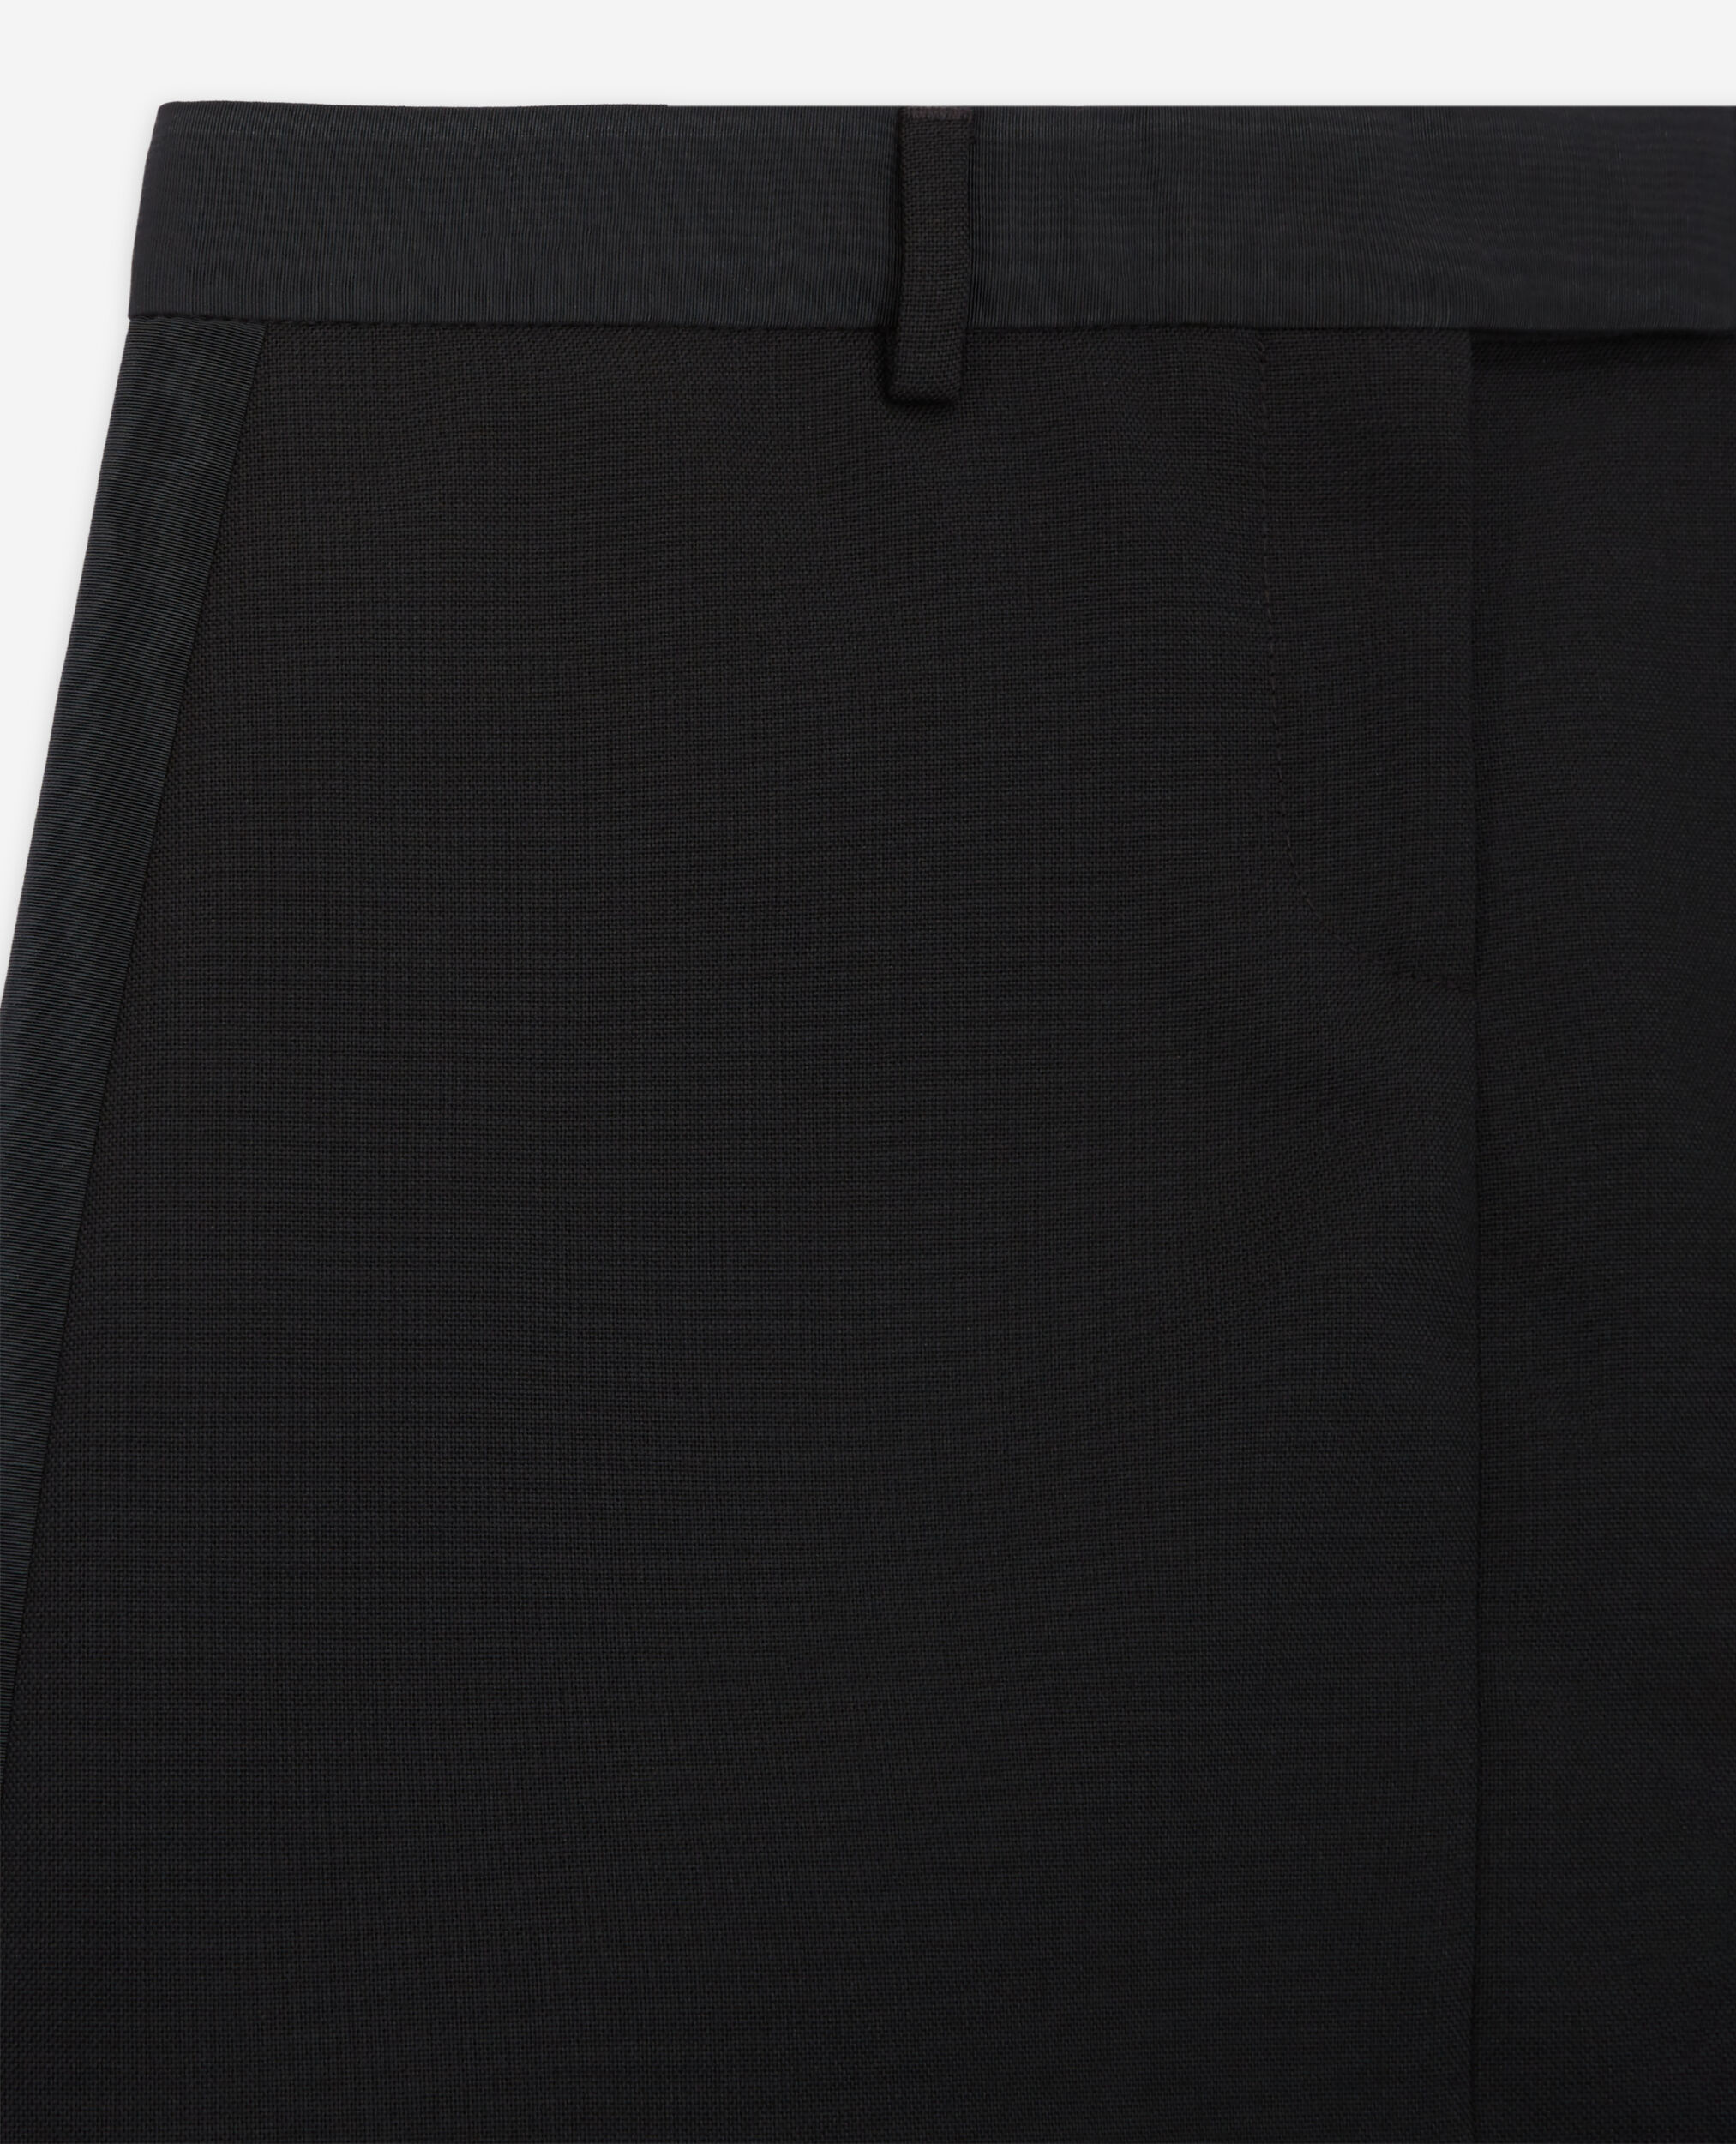 Falda corta lana negra, BLACK, hi-res image number null